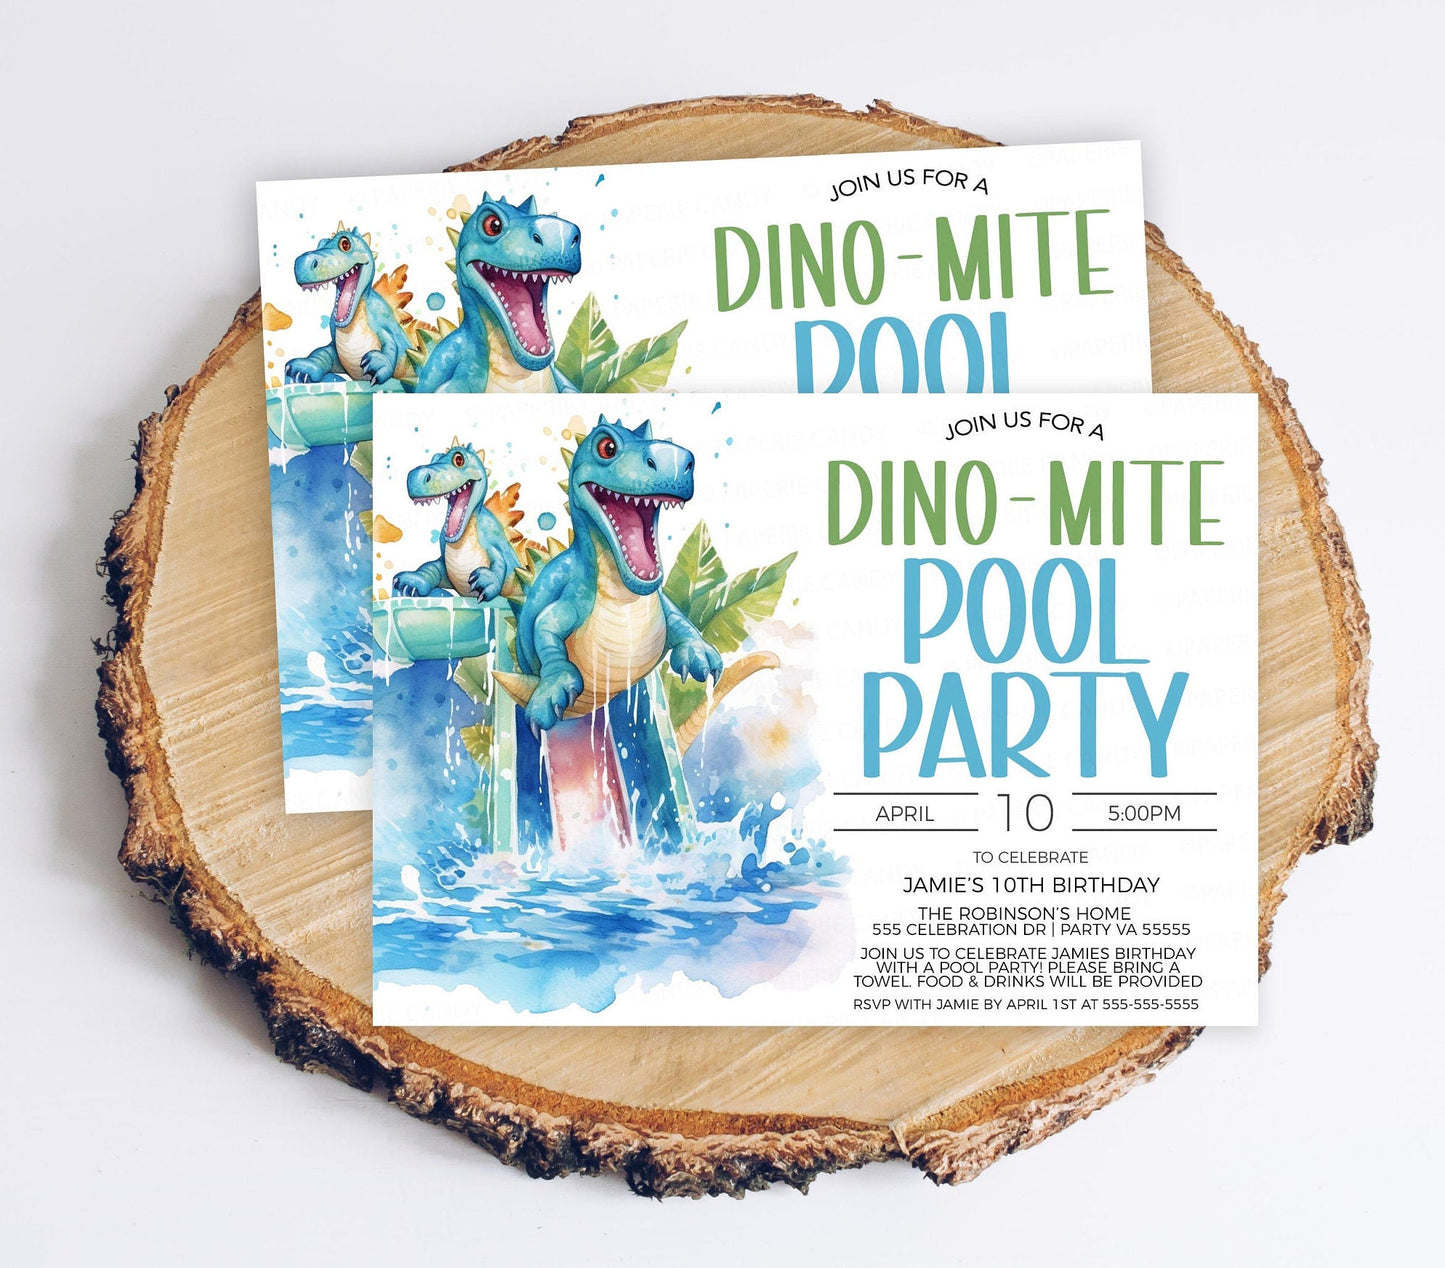 Dinosaur Pool Party Invitation, Dino Water Park Invite, Dino-Mite Water Slide Party, Pool Birthday, End Of School Party, Editable Printable